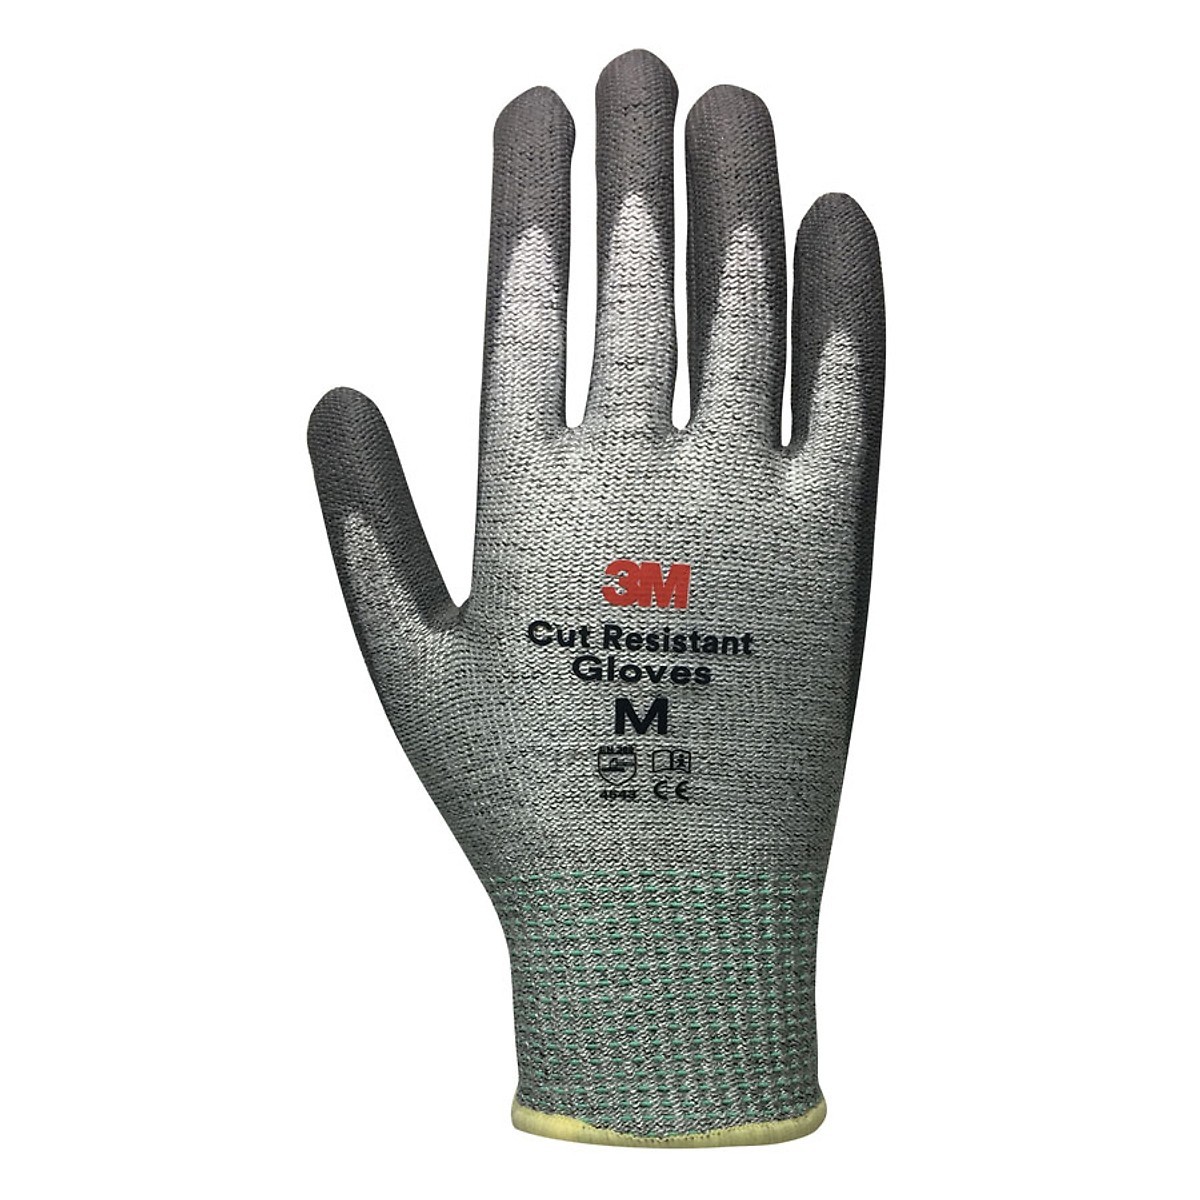 3M Cut Resistant Gloves (ATG-3M-LV1-S)